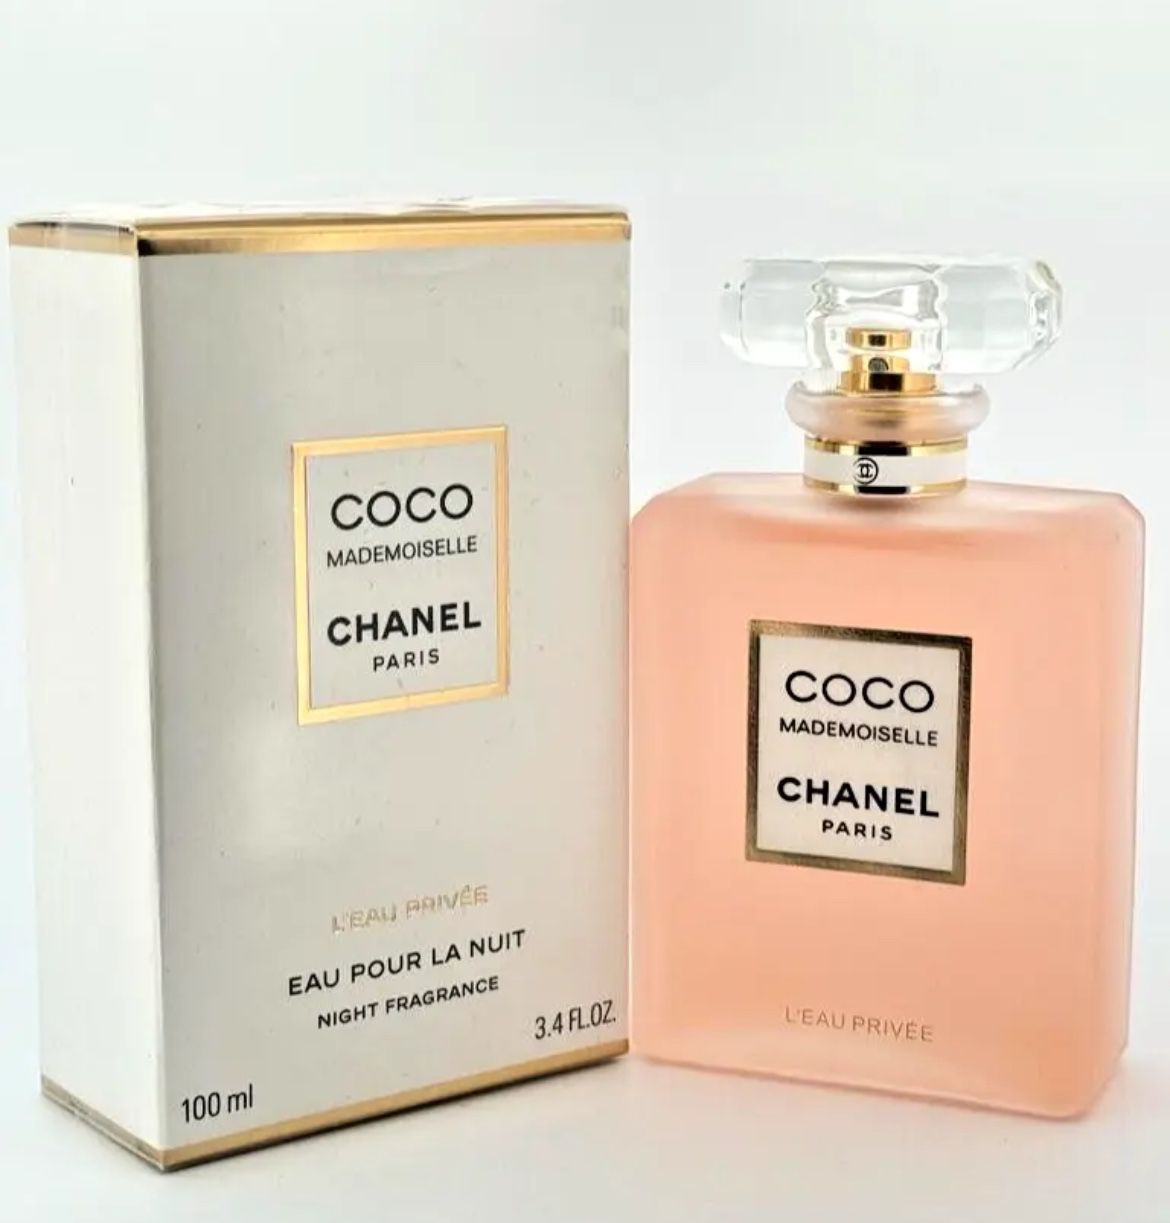 New Coco Mademoiselle Chanel L Eau Privee Perfume 3.4 oz 100 ml Spray